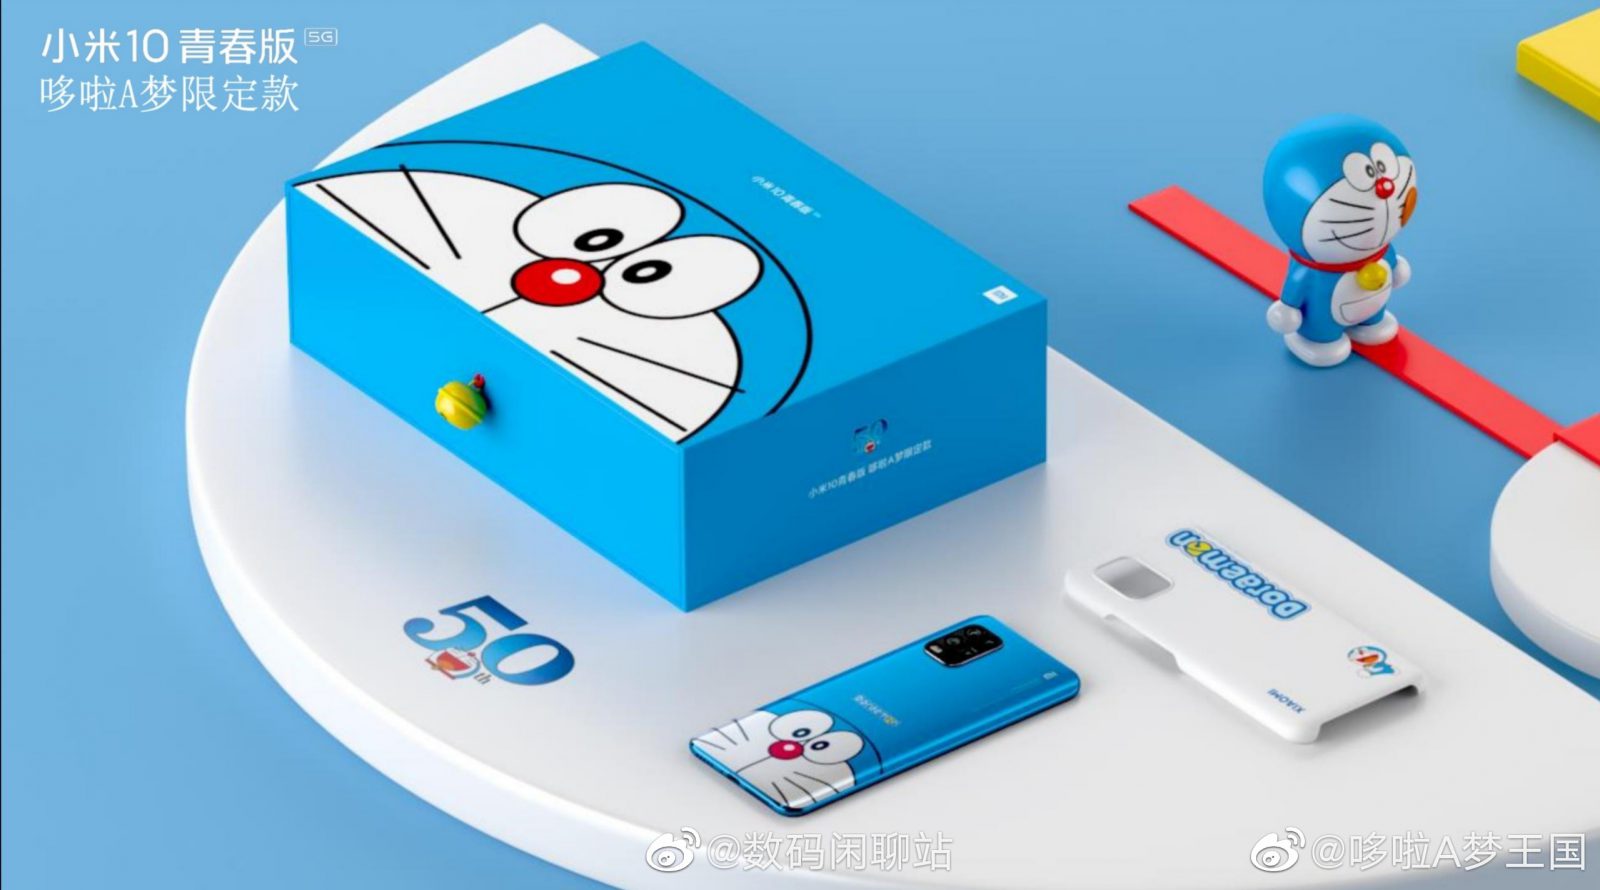 EgasP2YVoAAu9wb | mi 10 youth doraemon edition | ของมันต้องมี หลุด Xiaomi Mi 10 Youth Doraemon Edition จ่อเปิดตัวเร็ว ๆ นี้!